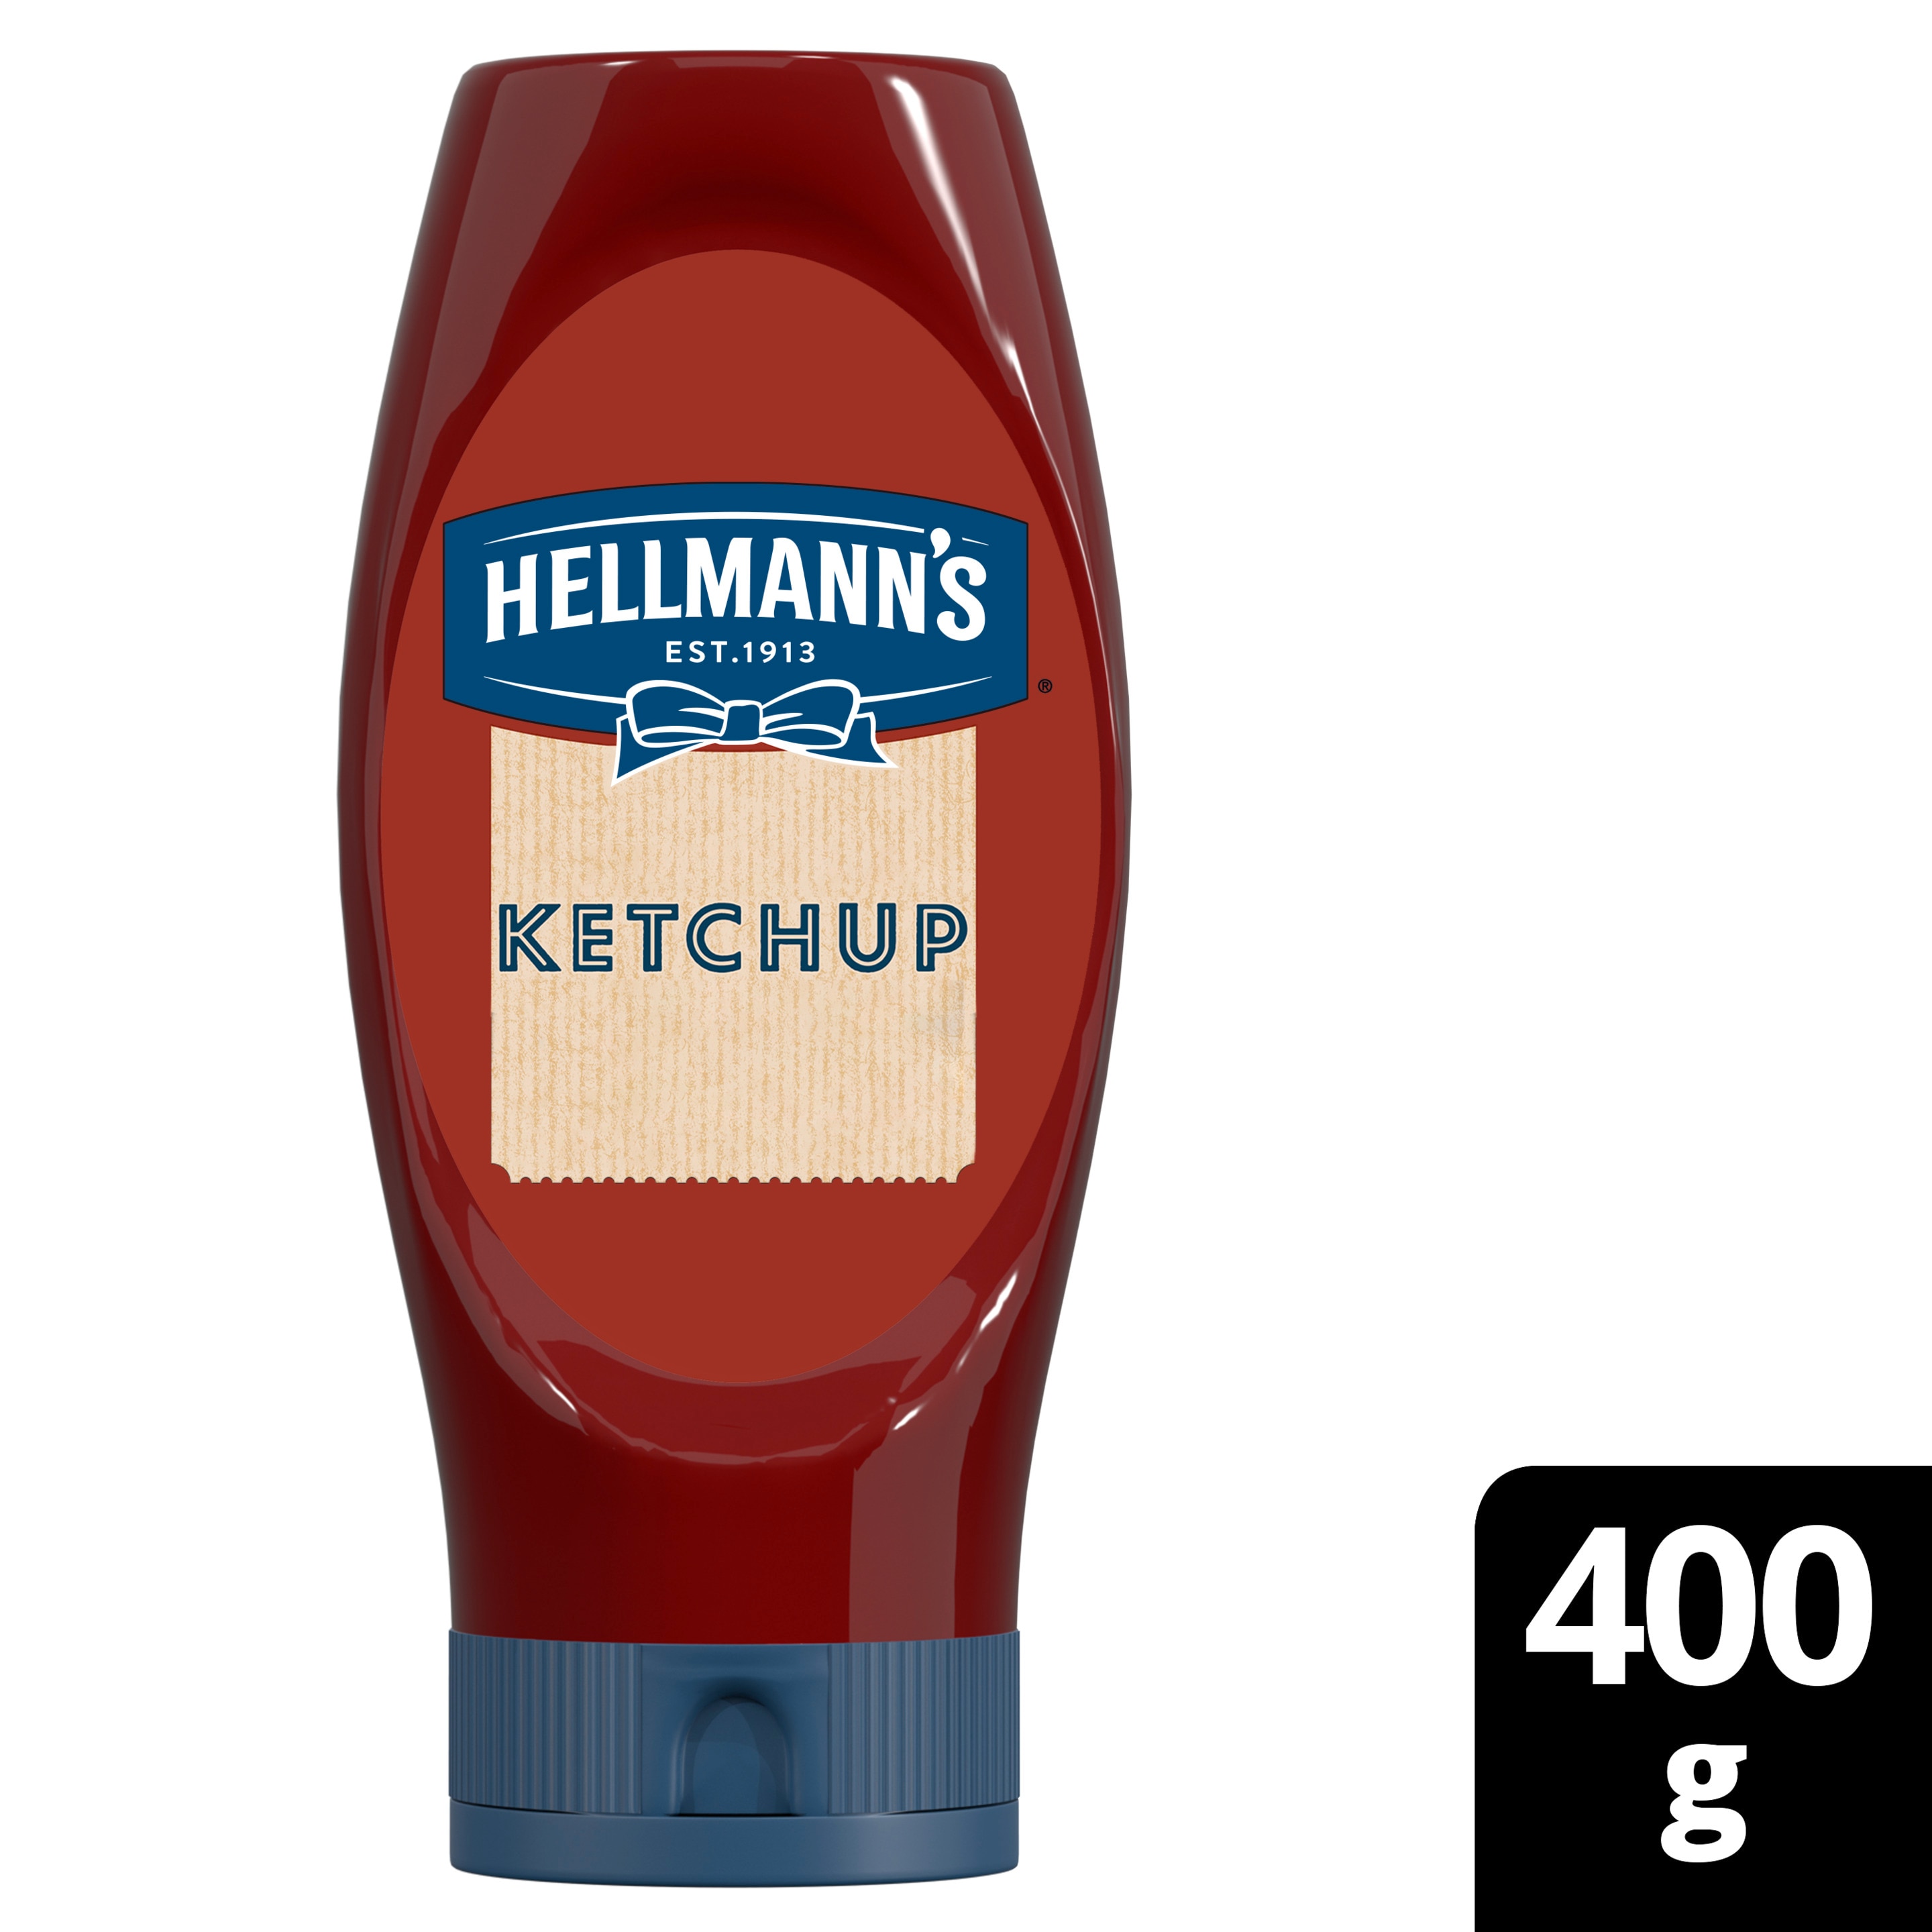 Imagen de envase de Ketchup Hellmann's Squeeze